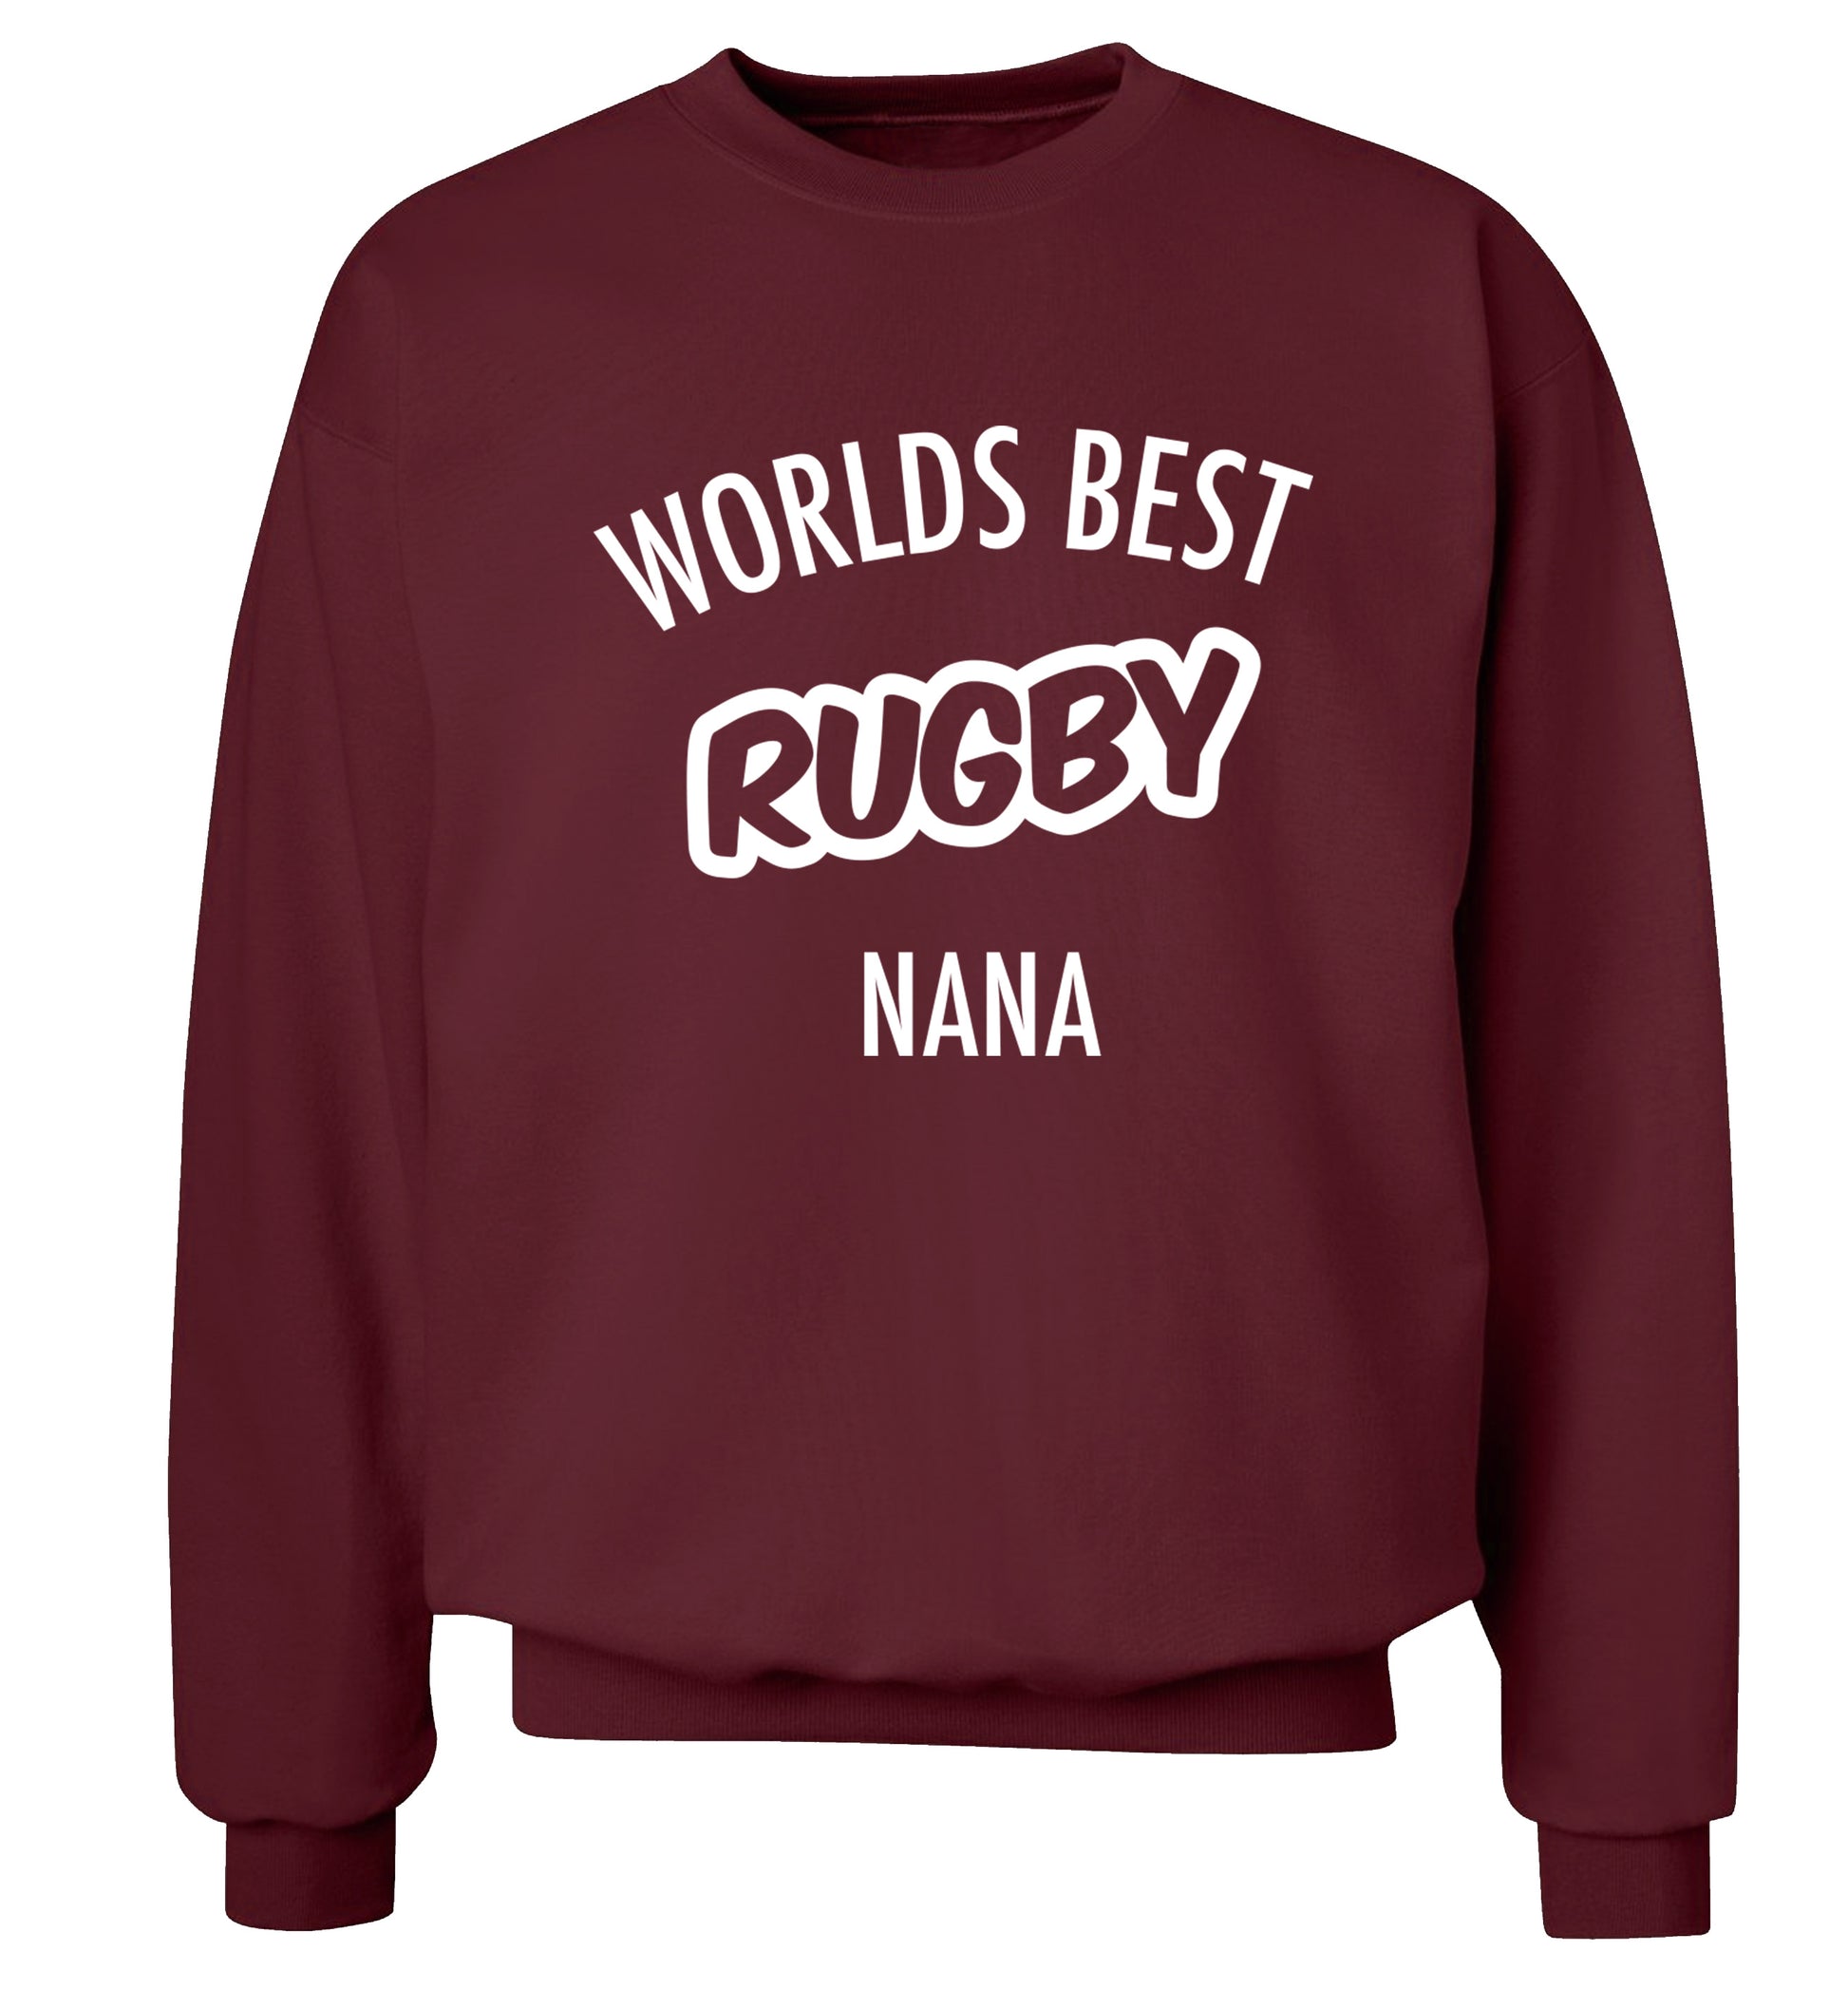 Worlds Best Rugby Grandma Adult's unisex maroon Sweater 2XL